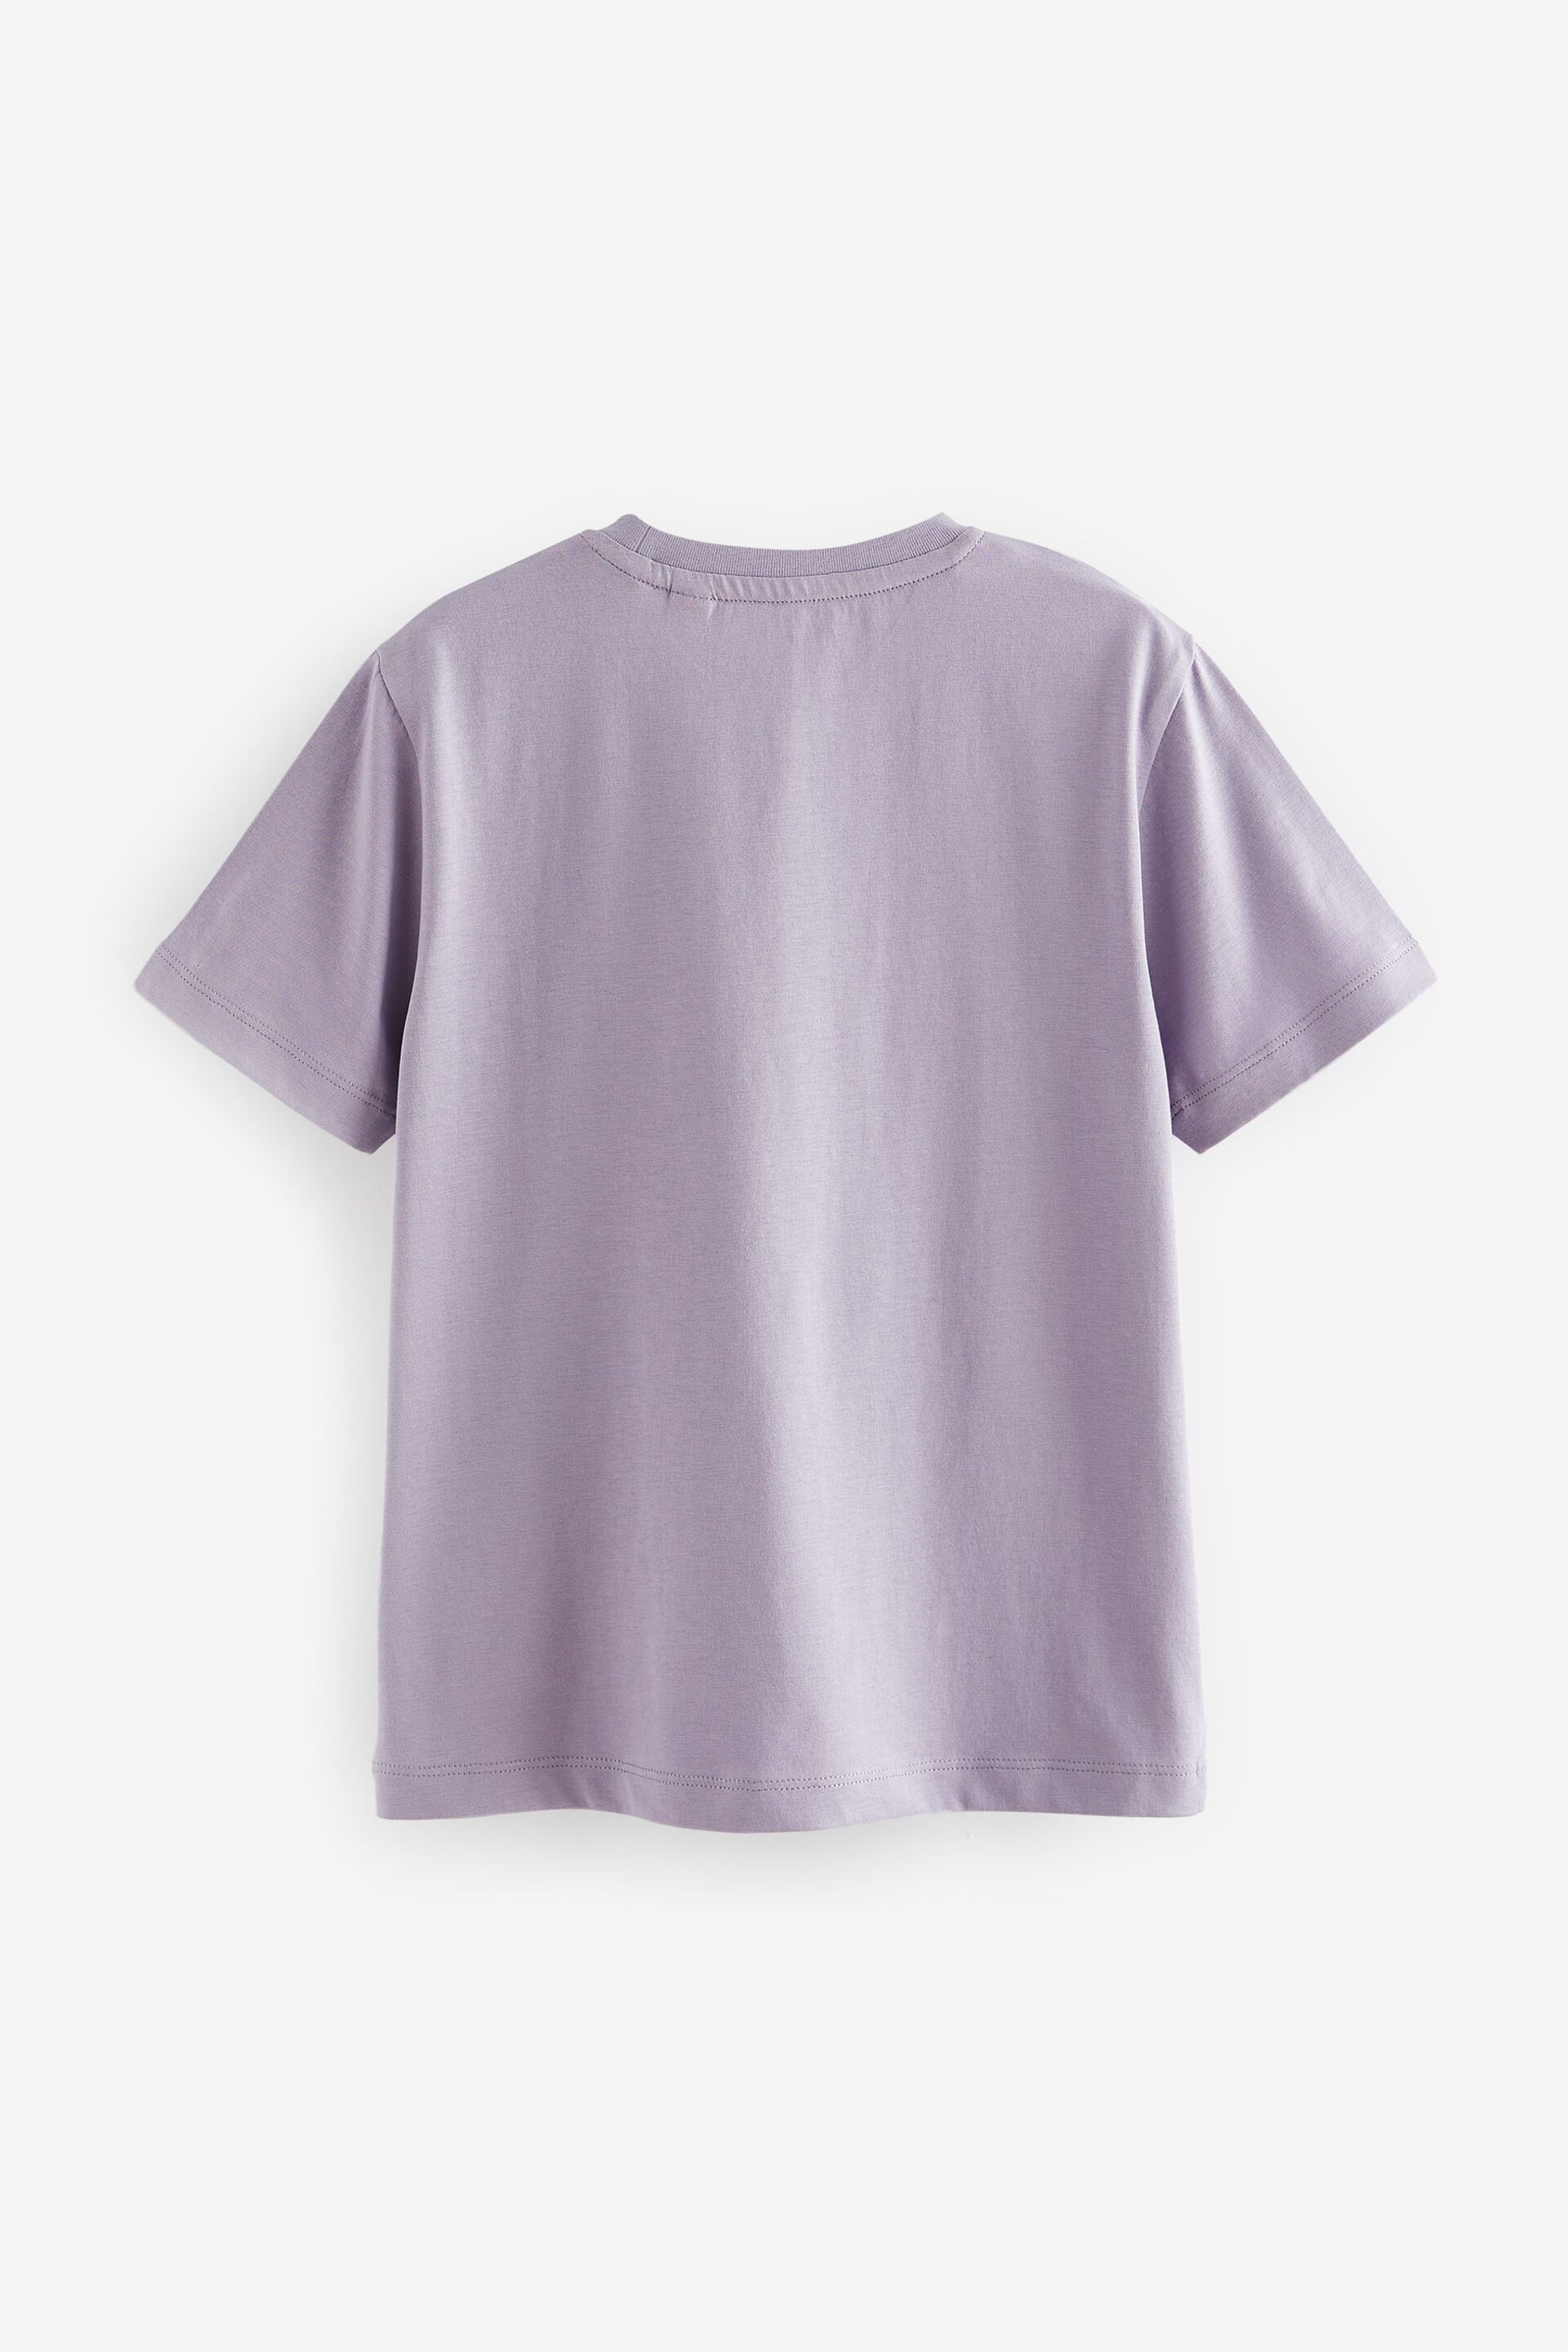 smALLSAINTS Lilac Purple Boys Brace Crew 3 Pack T-Shirts - Image 5 of 6